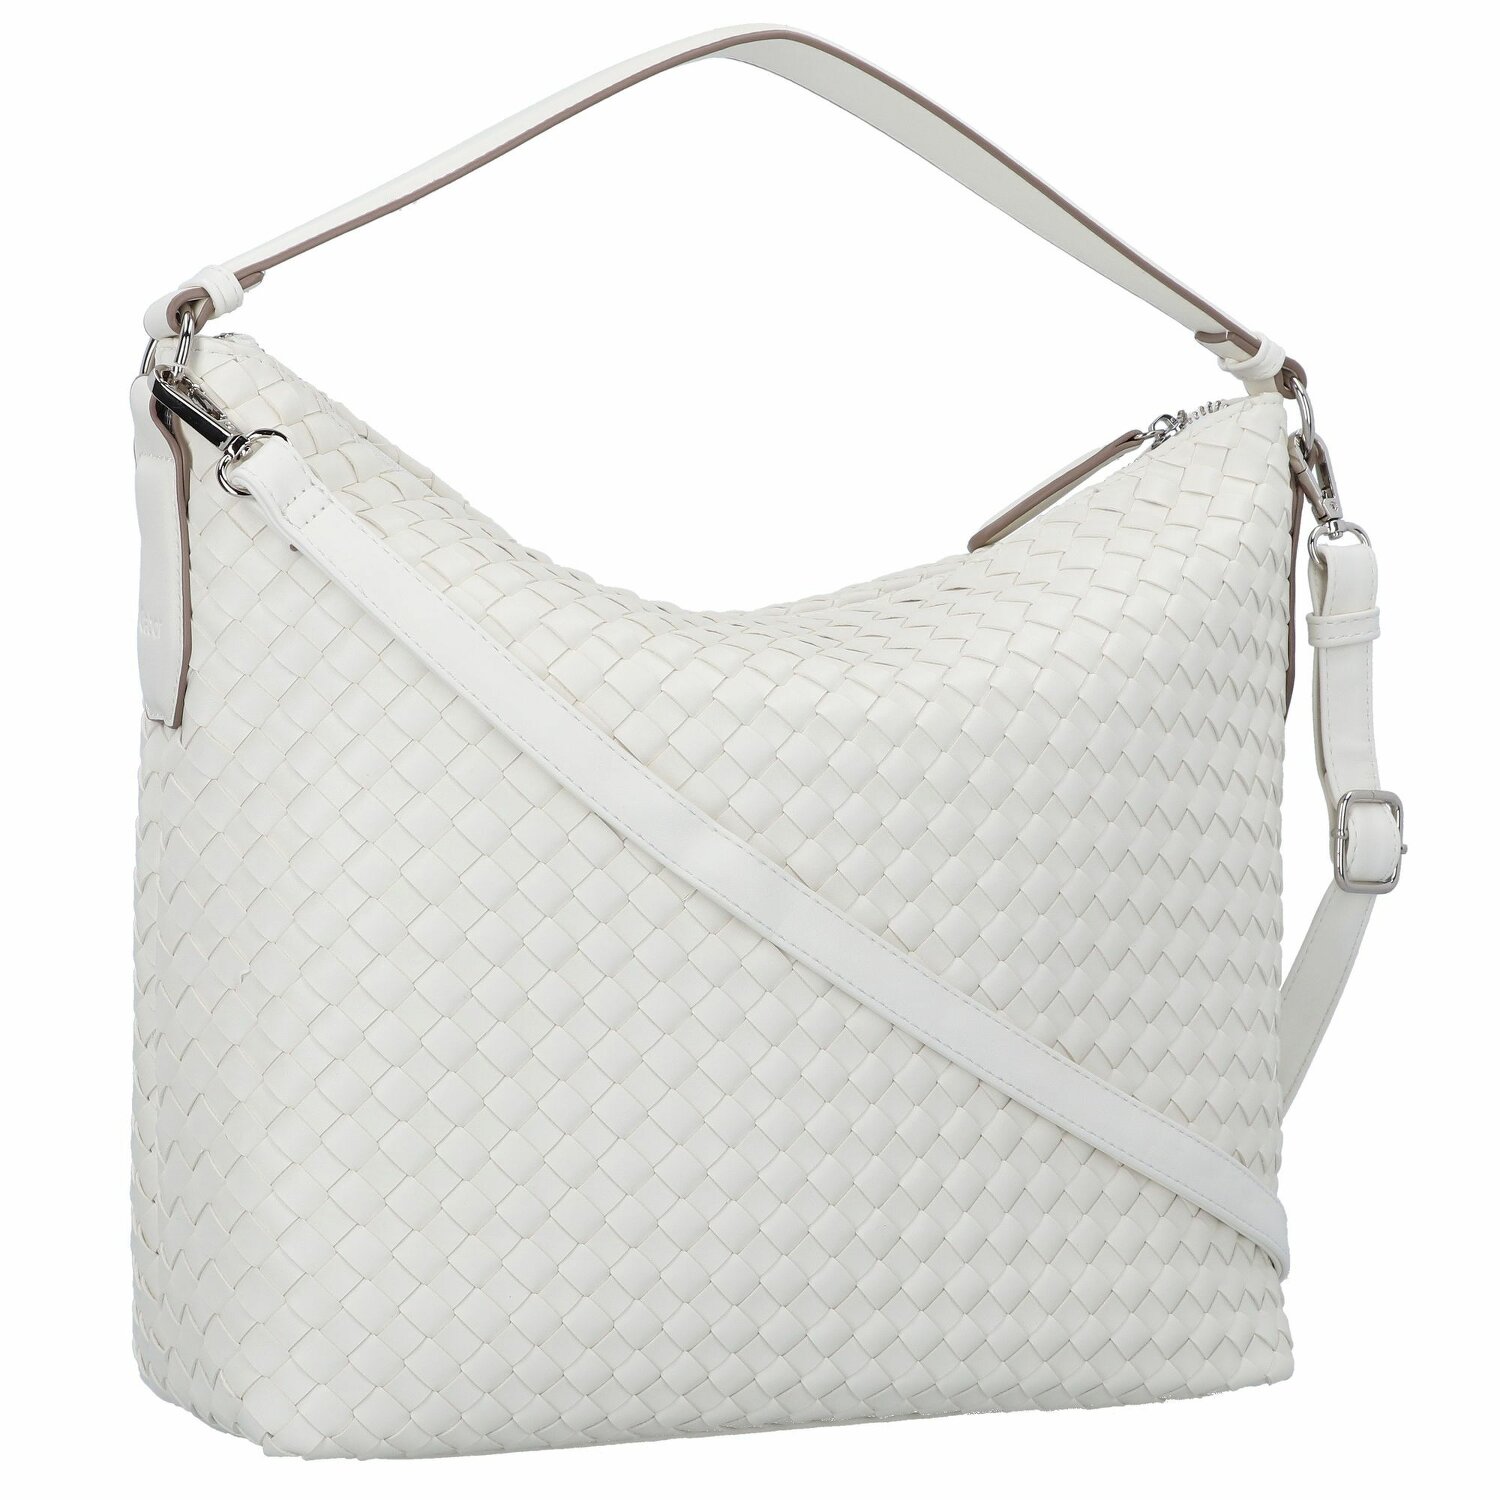 Gabor Women's Emilia Shoulder Bag, Off White, one Size: .co